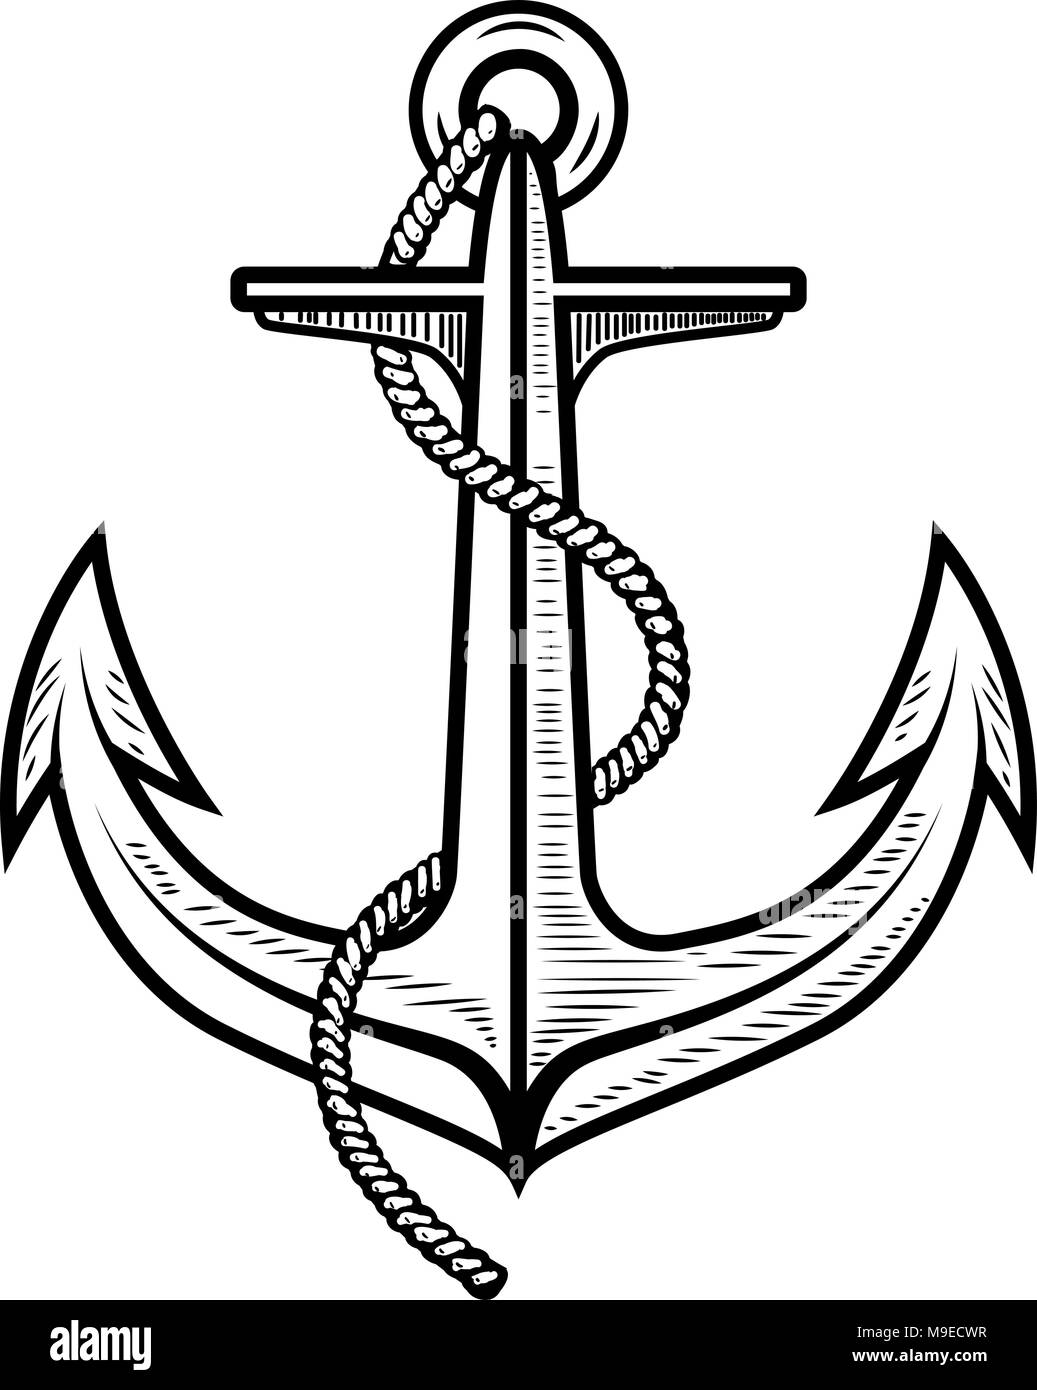 Anchor illustration isolated on white background. Design element for logo, label, emblem, sign. Vector illustration Stock Vector